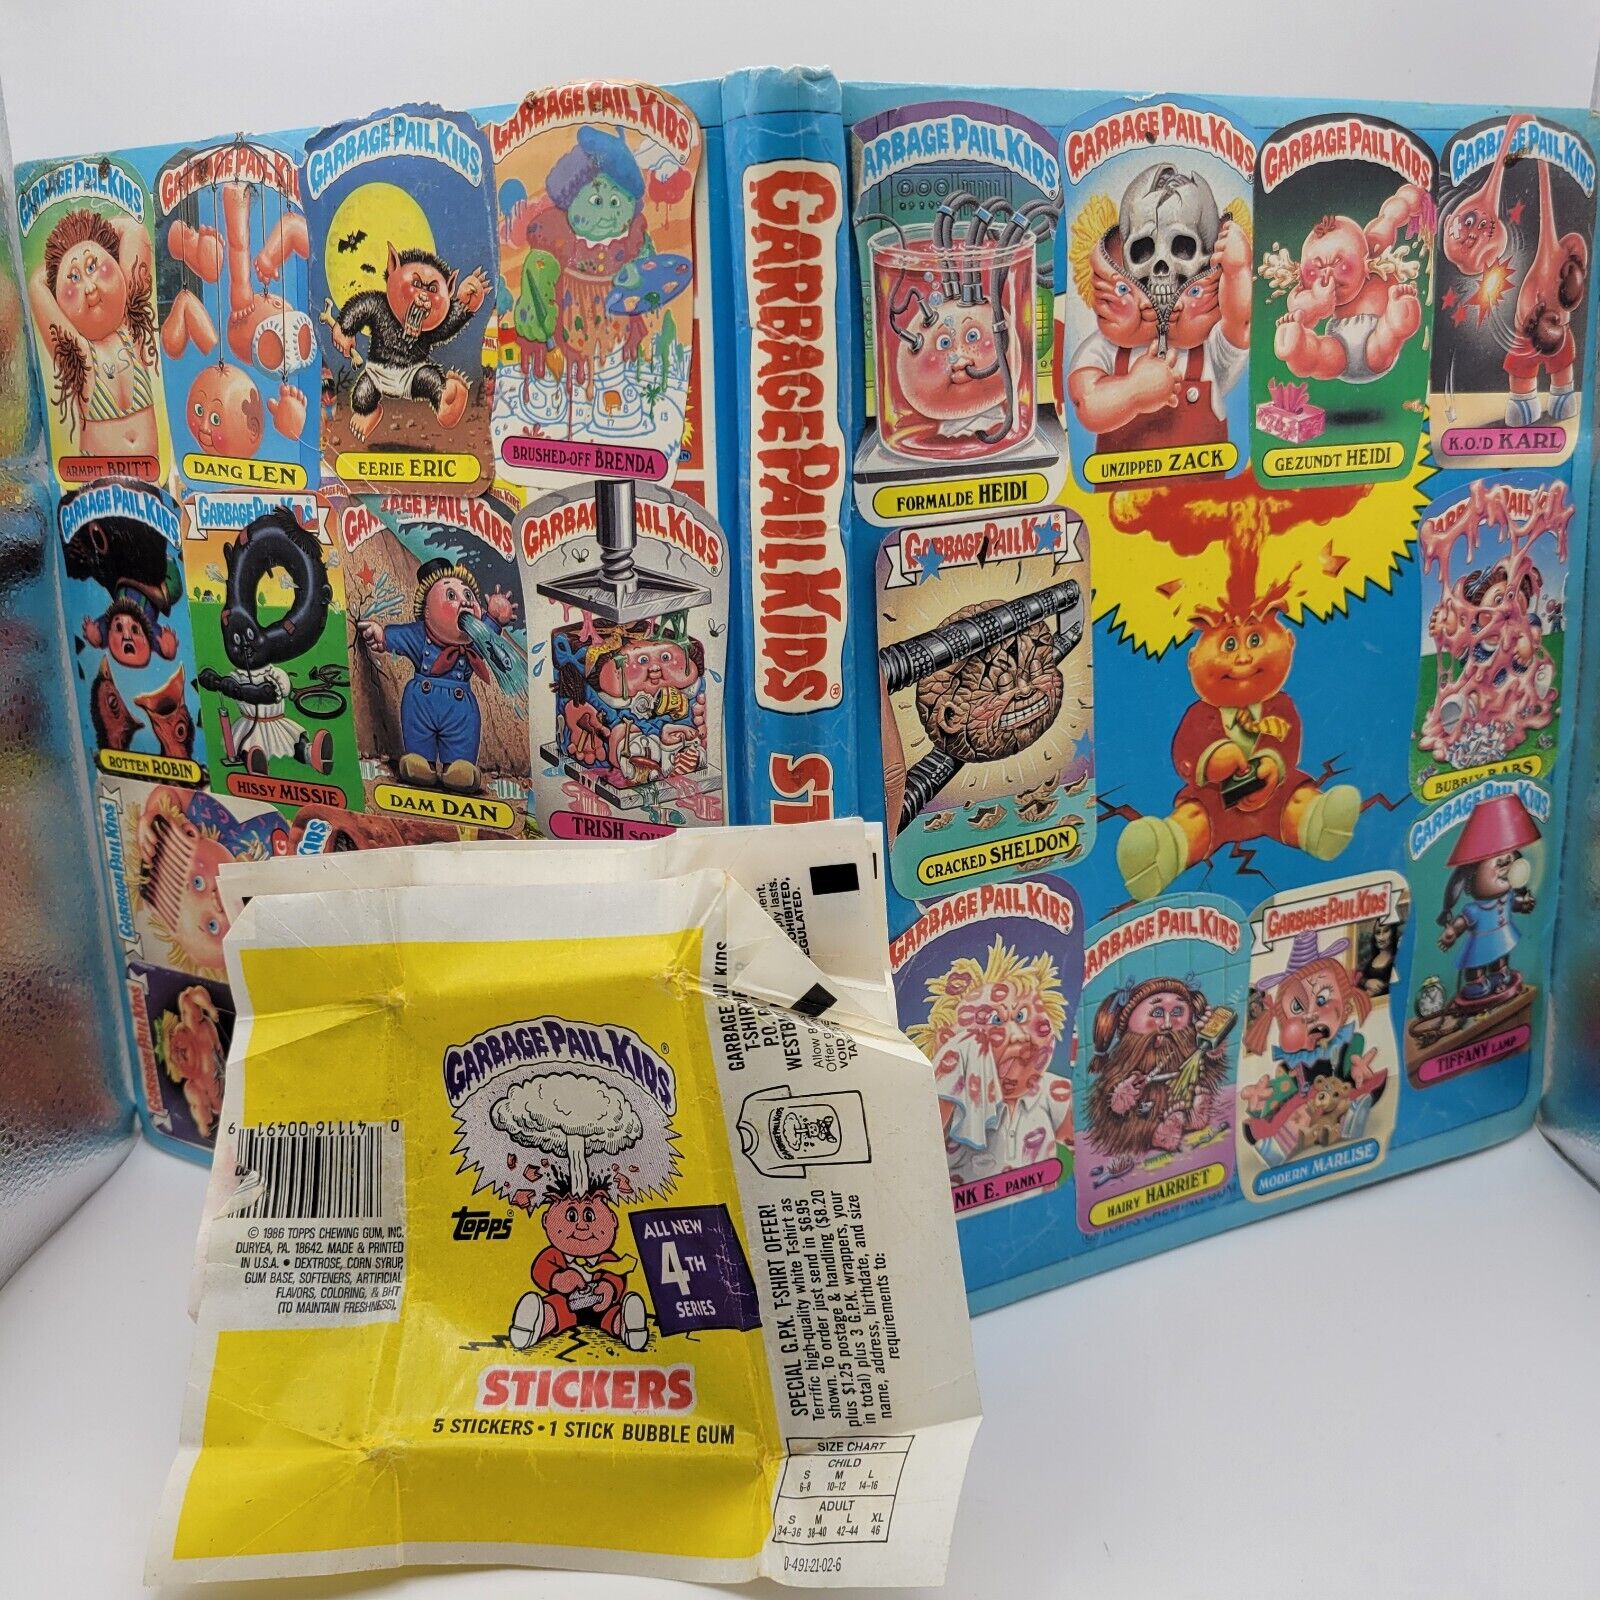 Vintage Garbage Pail Kids 1985 Sticker Album Loaded w/ Stickers + Wrappers